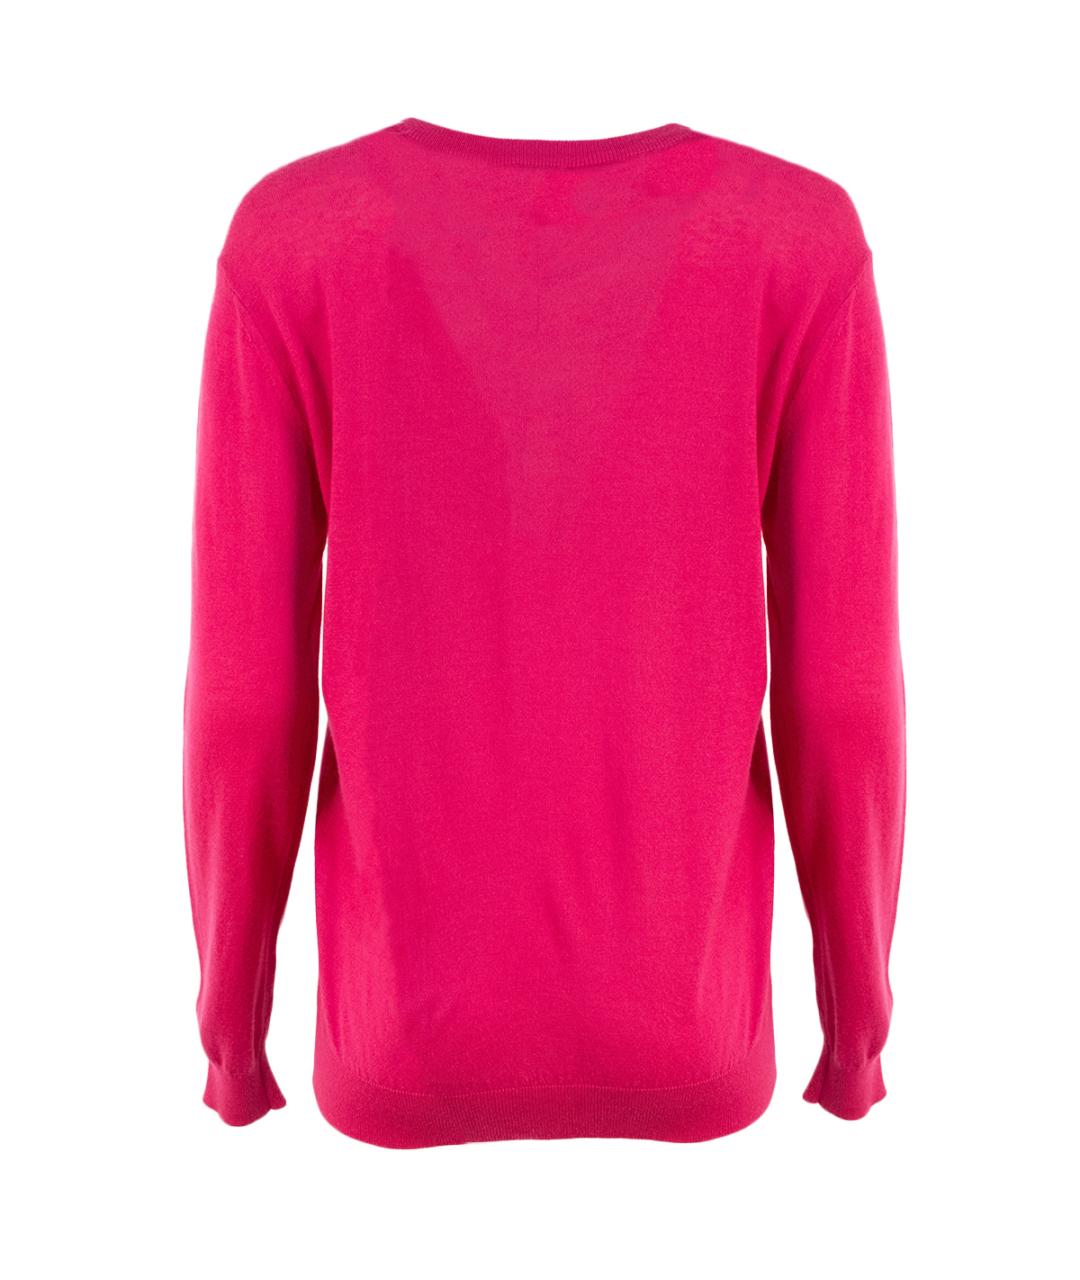 JOHN RICHMOND Розовый шерстяной джемпер / свитер, фото 2